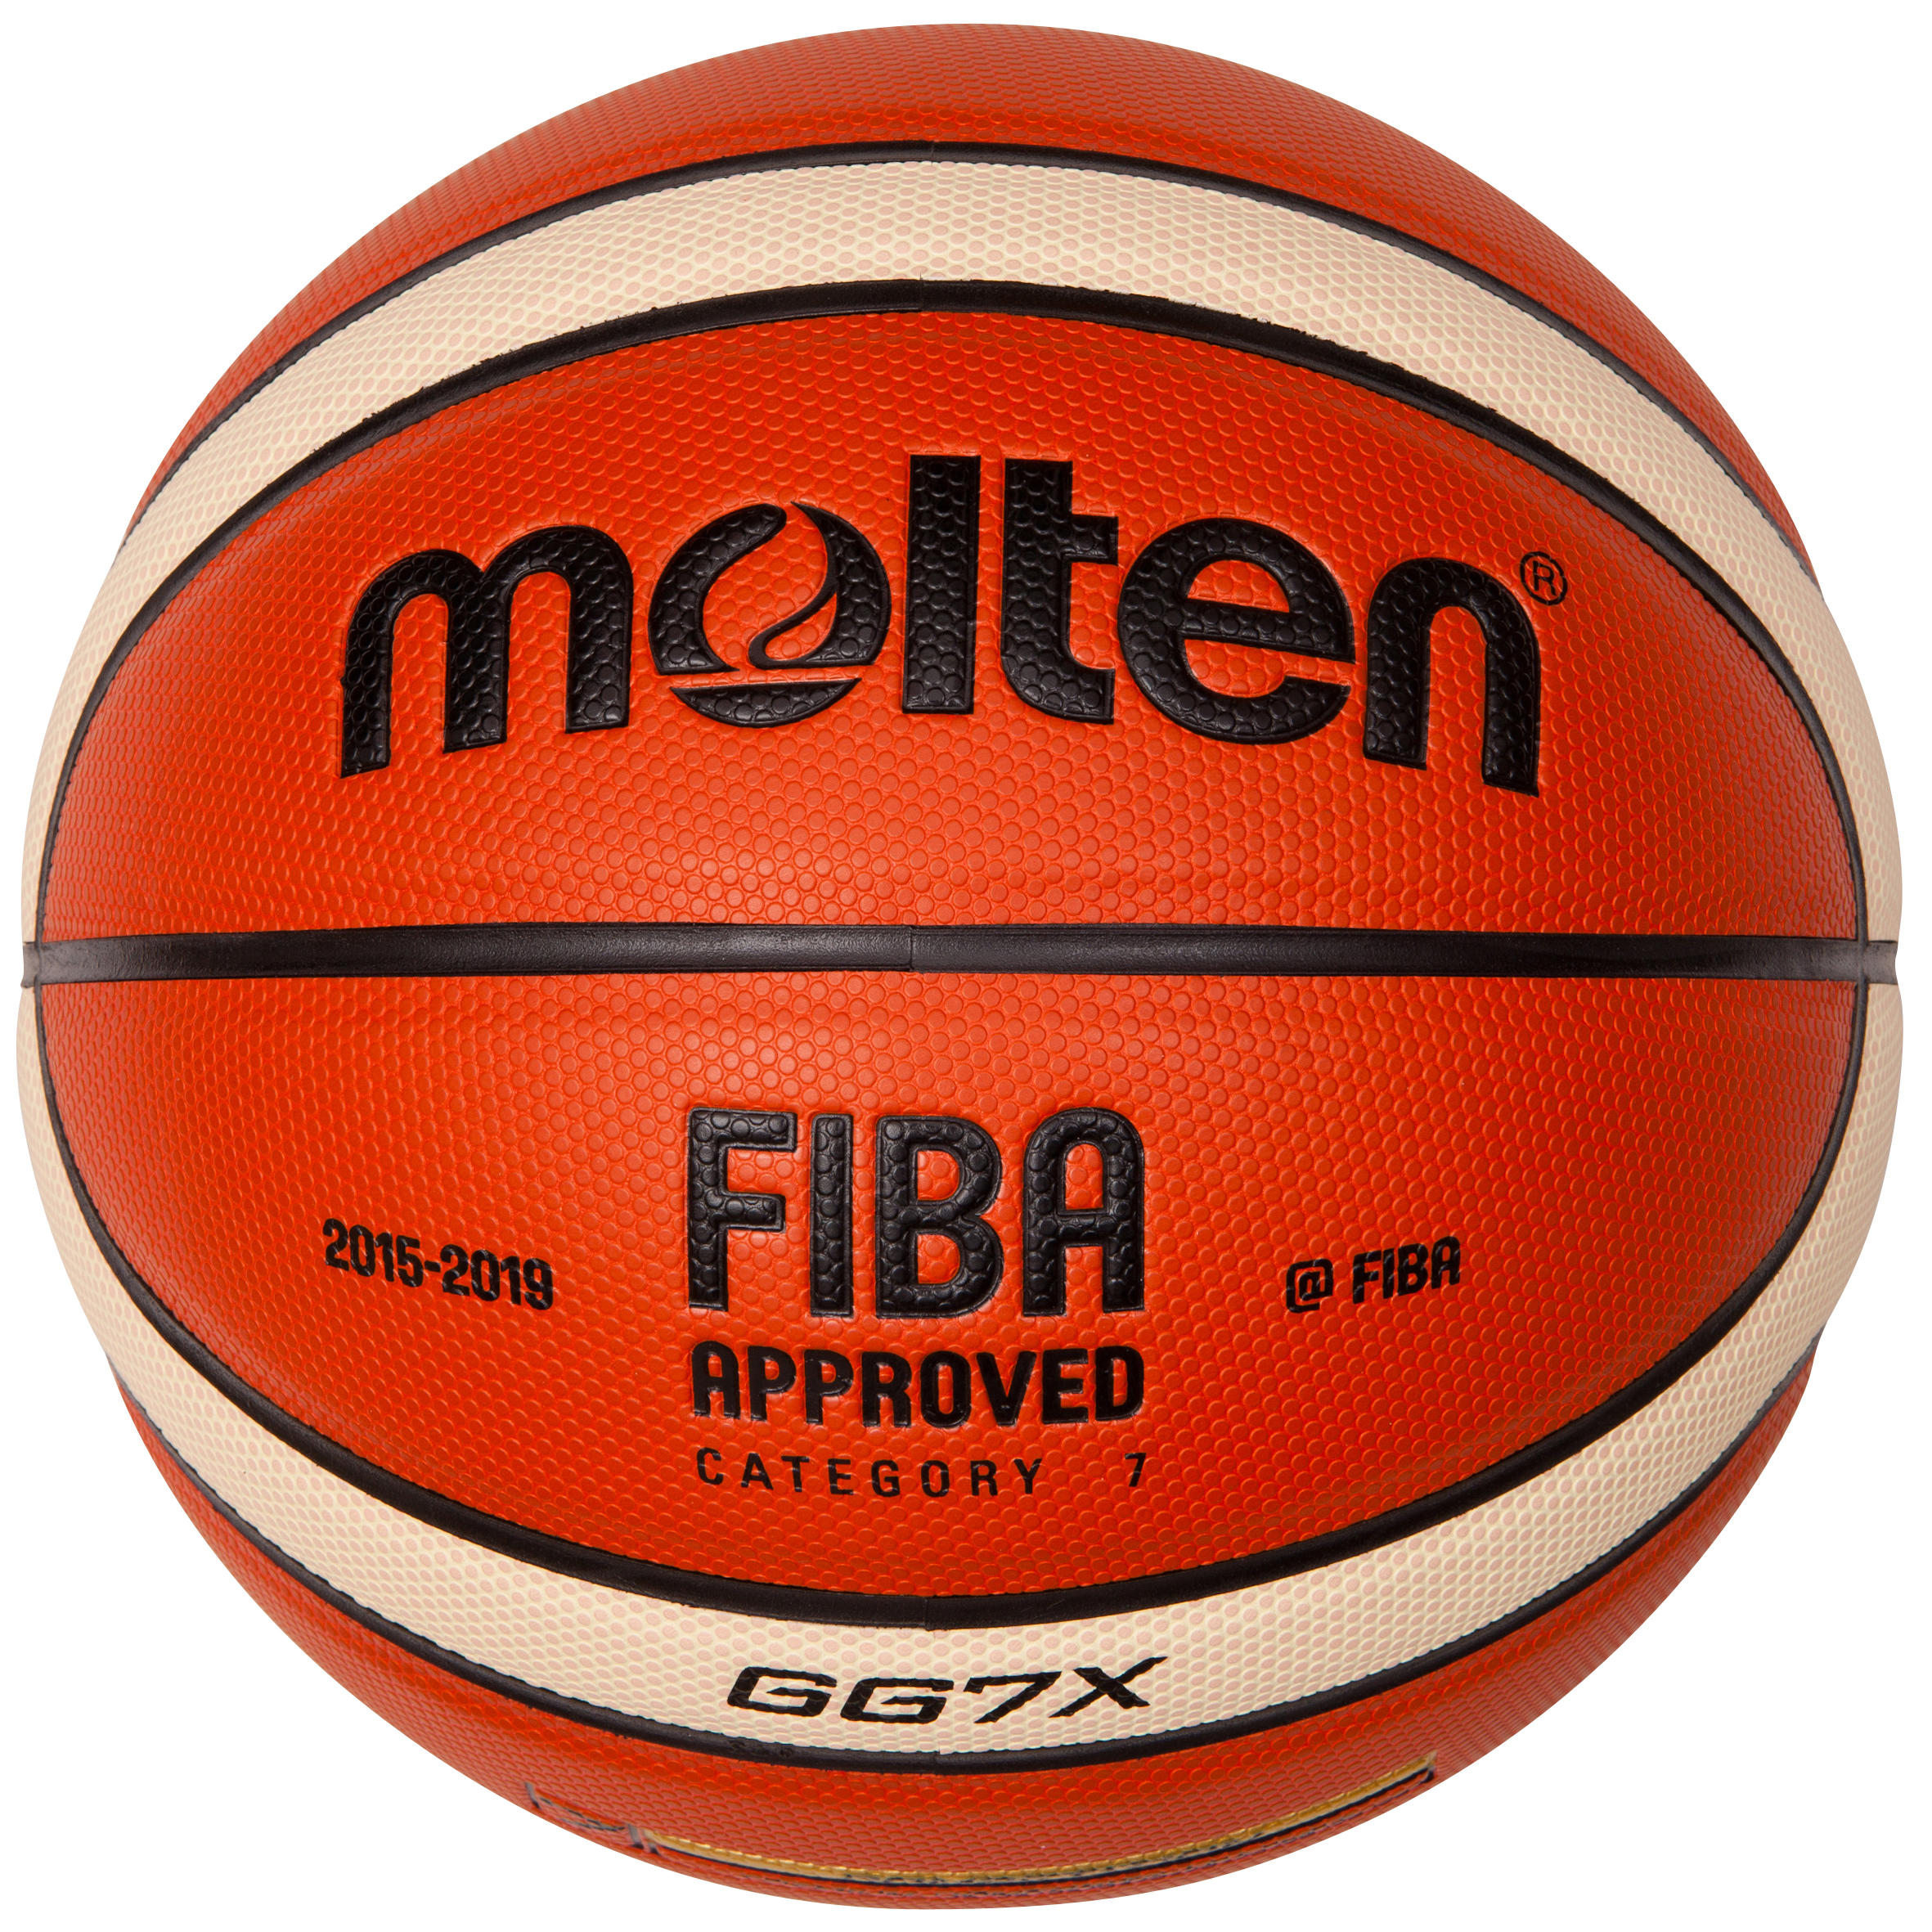 decathlon basketball ball